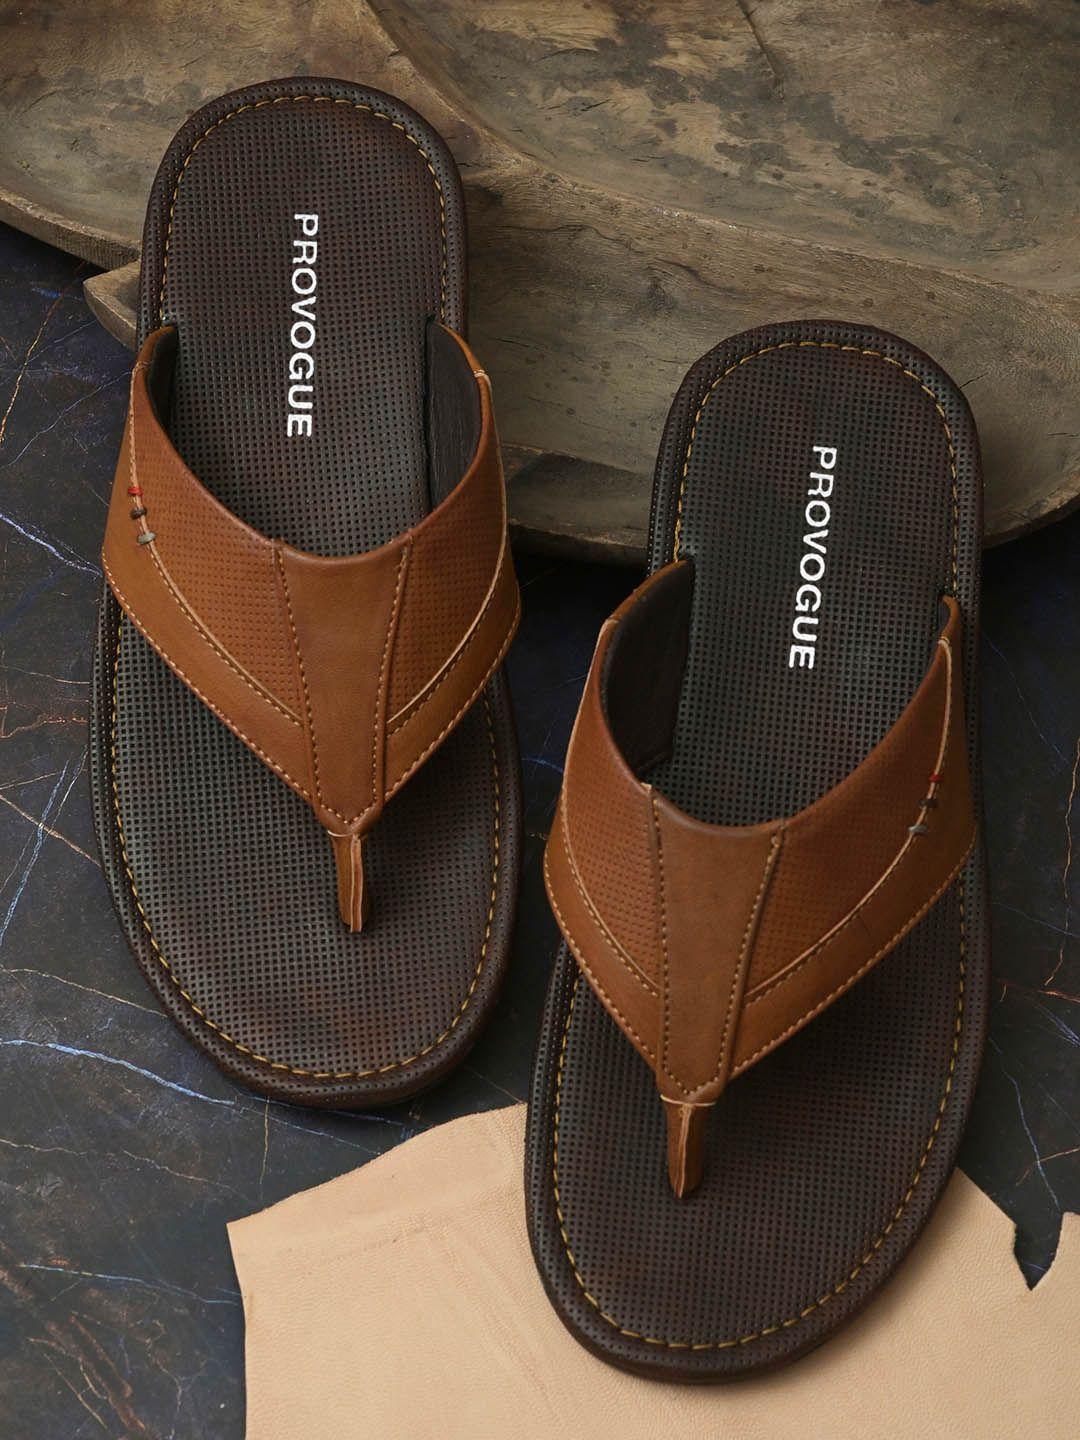 provogue-men-perforated-comfort-sandals